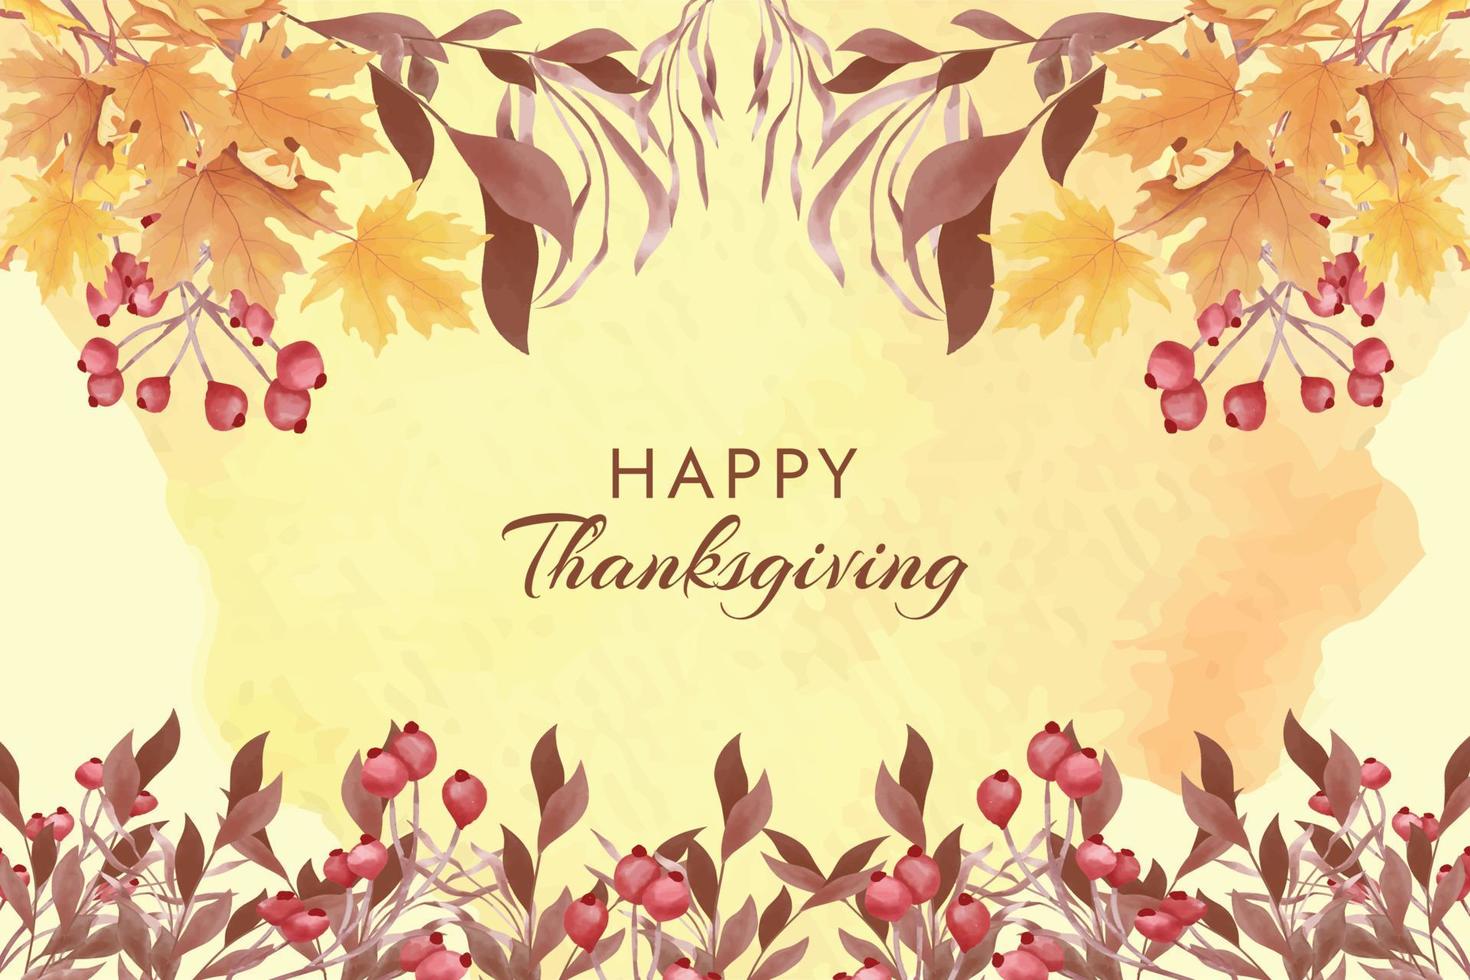 Thanksgiving-Aquarell-Blumenhintergrund mit Herbst-Aquarell-Blumenblättern-Vektor vektor